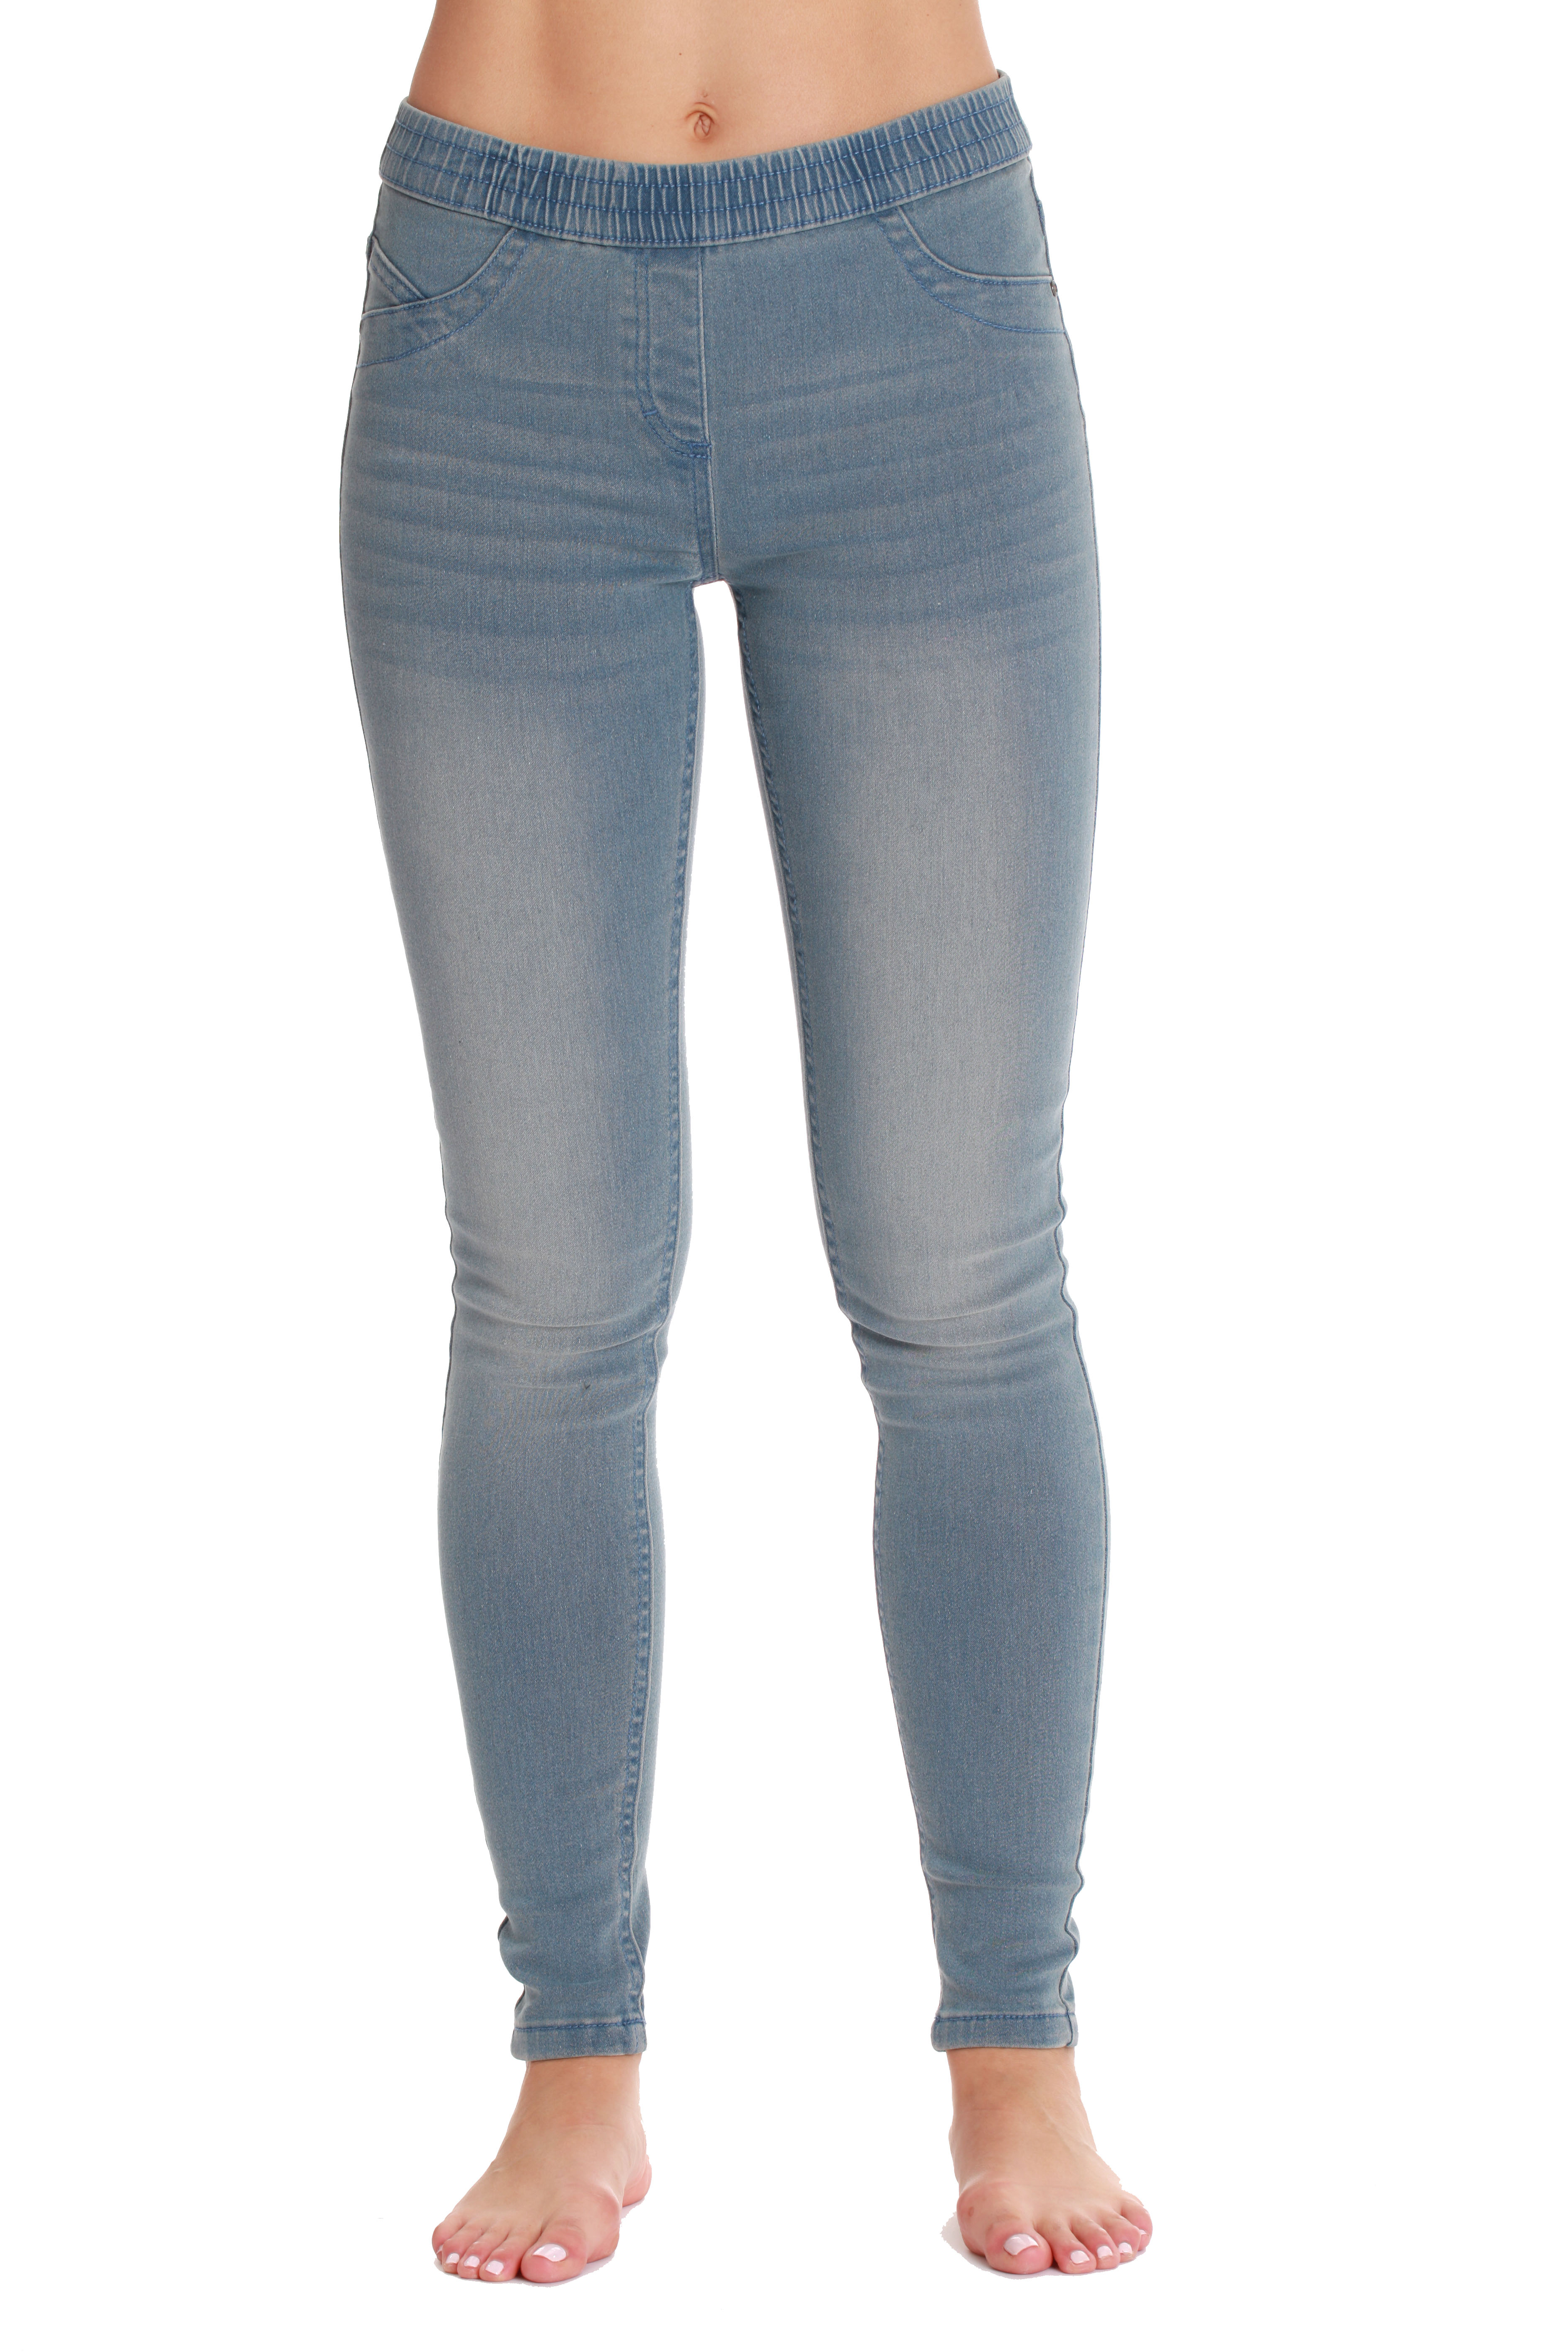 Just Love Women's Denim Jeggings with Pockets - Comfortable Stretch Jeans Leggings (Light Blue Denim, Large) - image 1 of 2